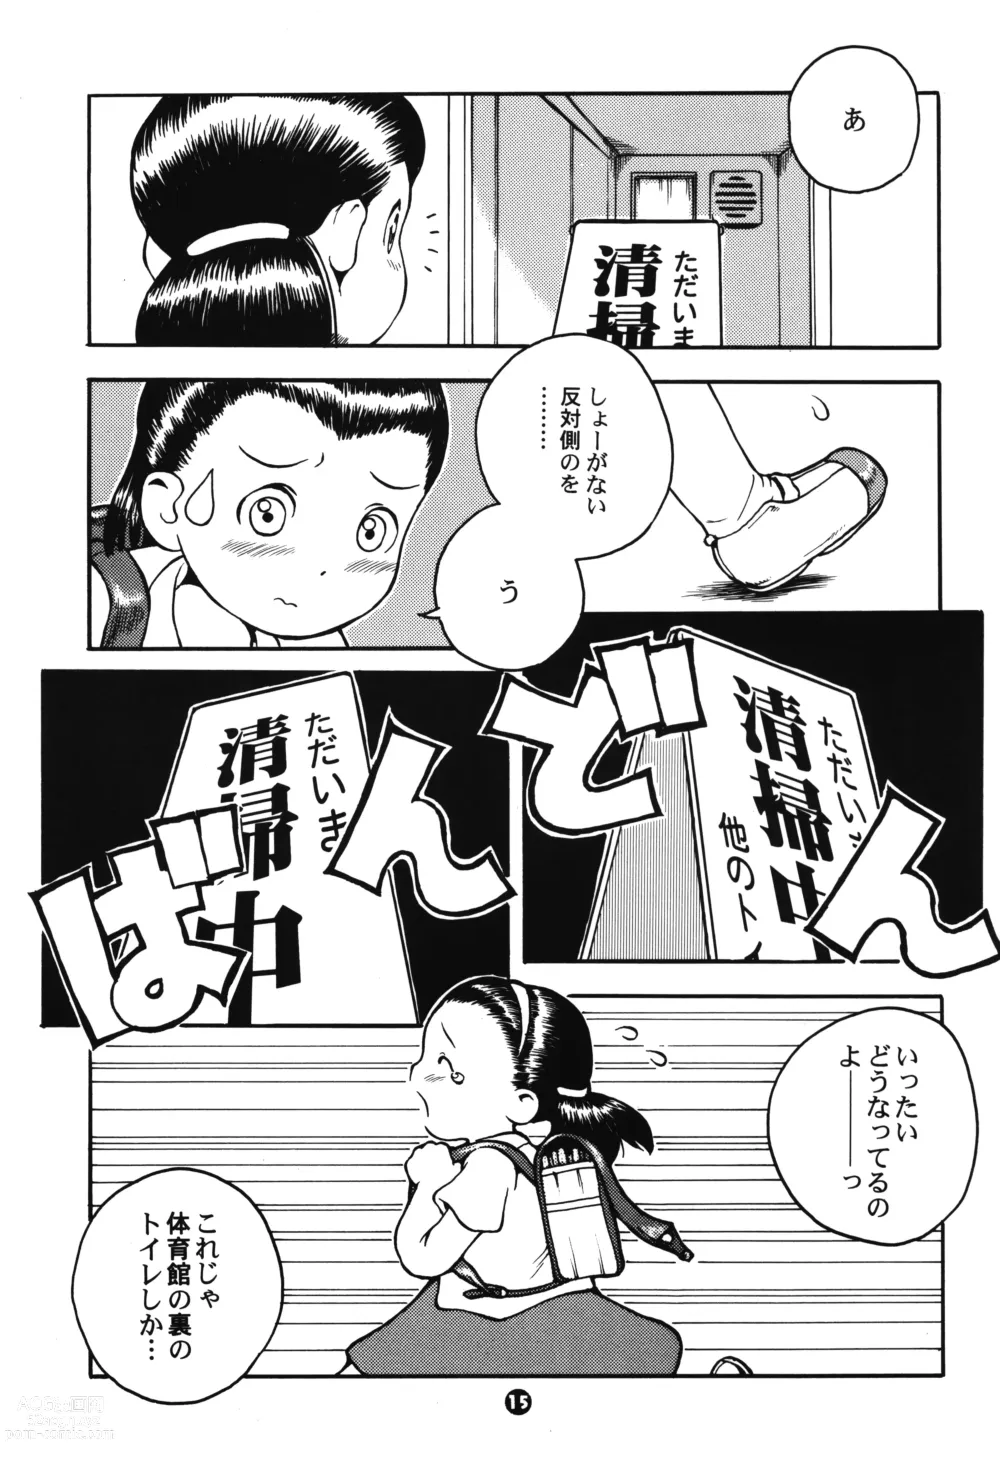 Page 14 of doujinshi MP #2